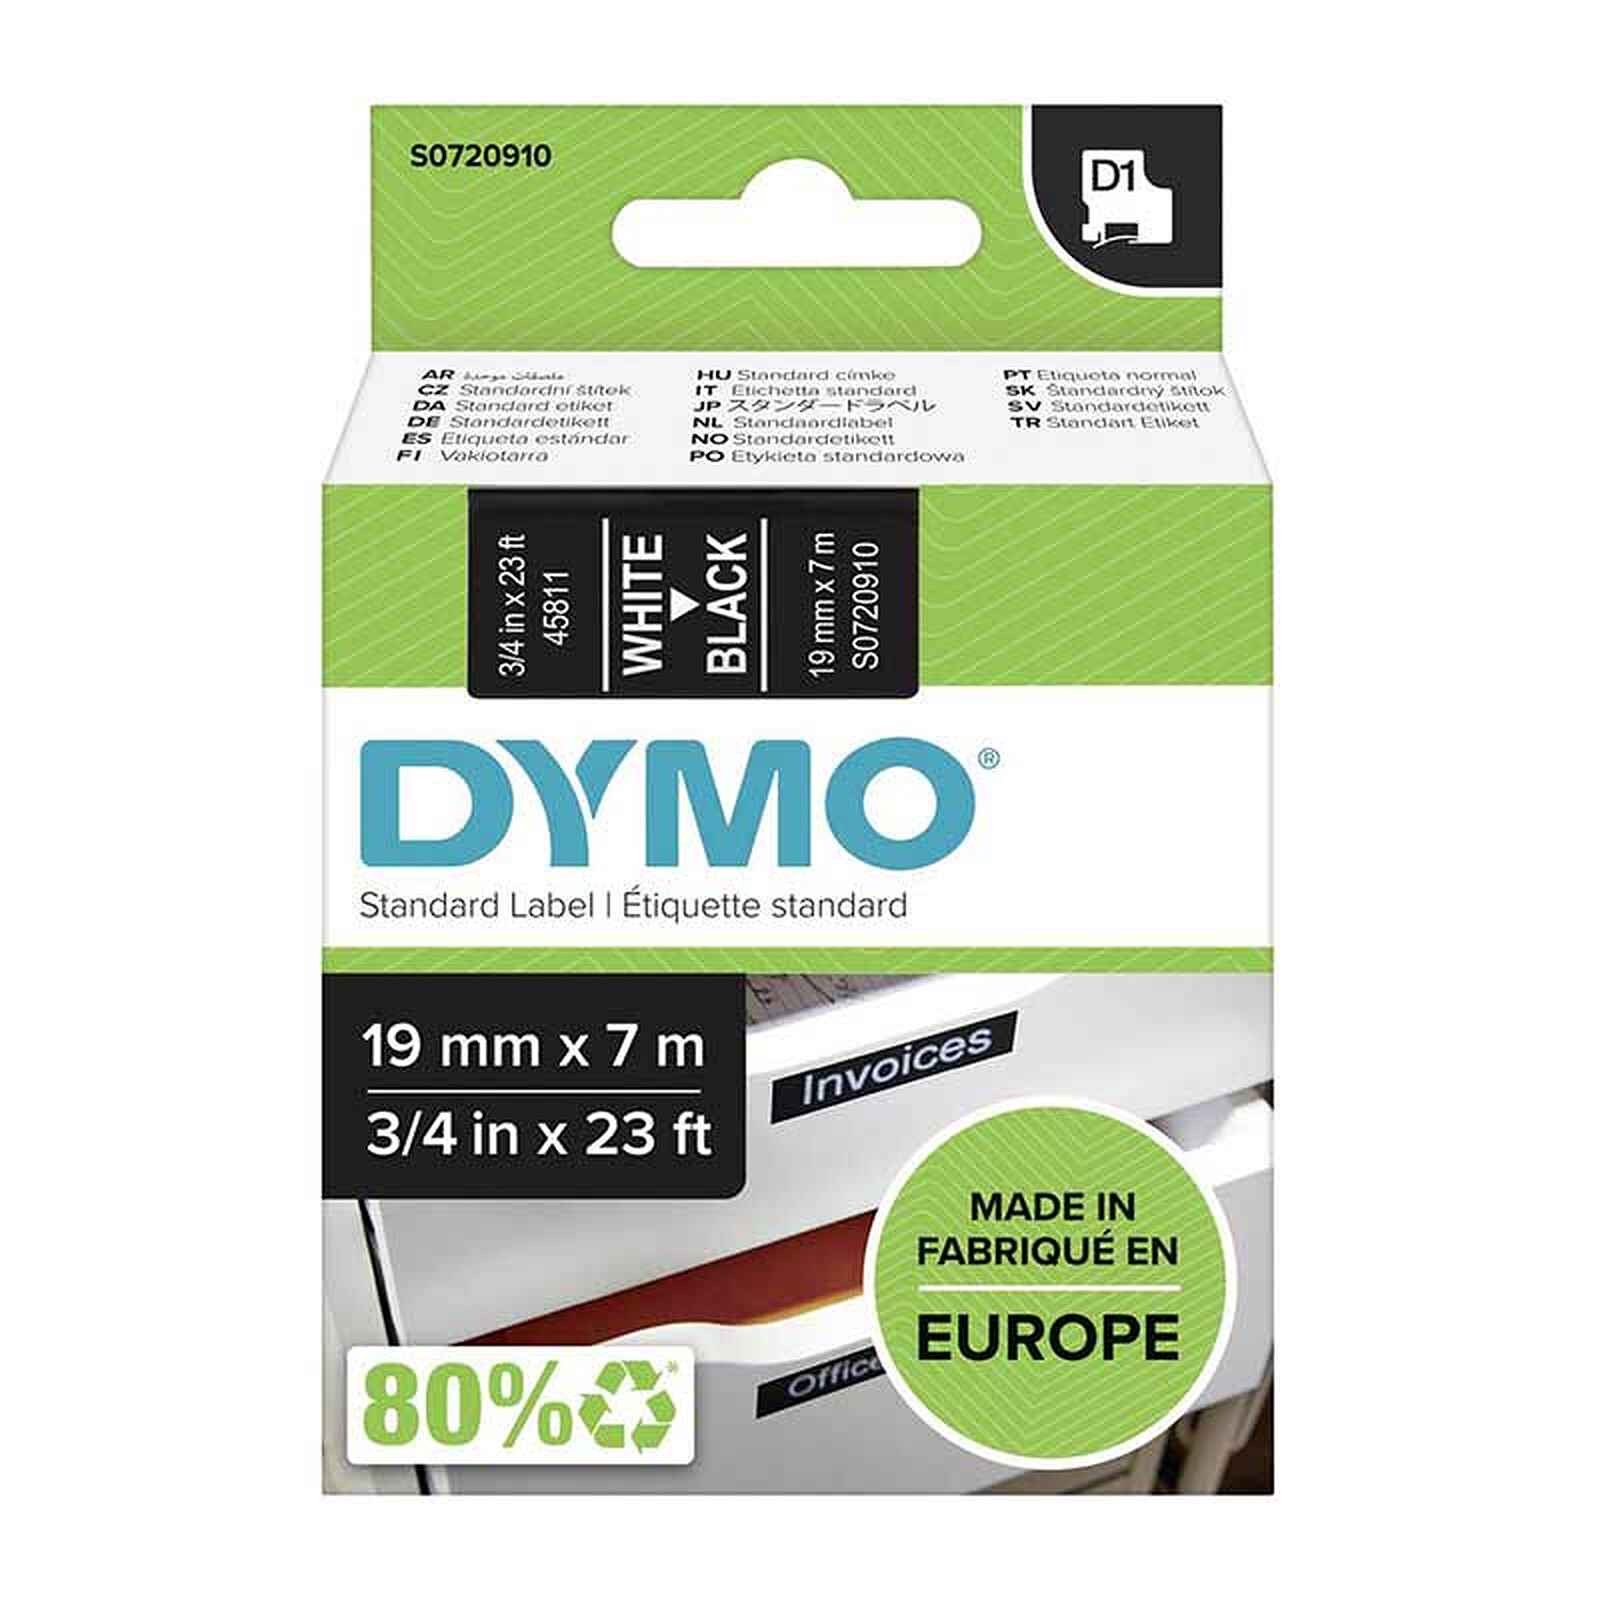 DYMO D1 Standard Label Tape white on black 19mm x 7m Label printer tape  LDLC